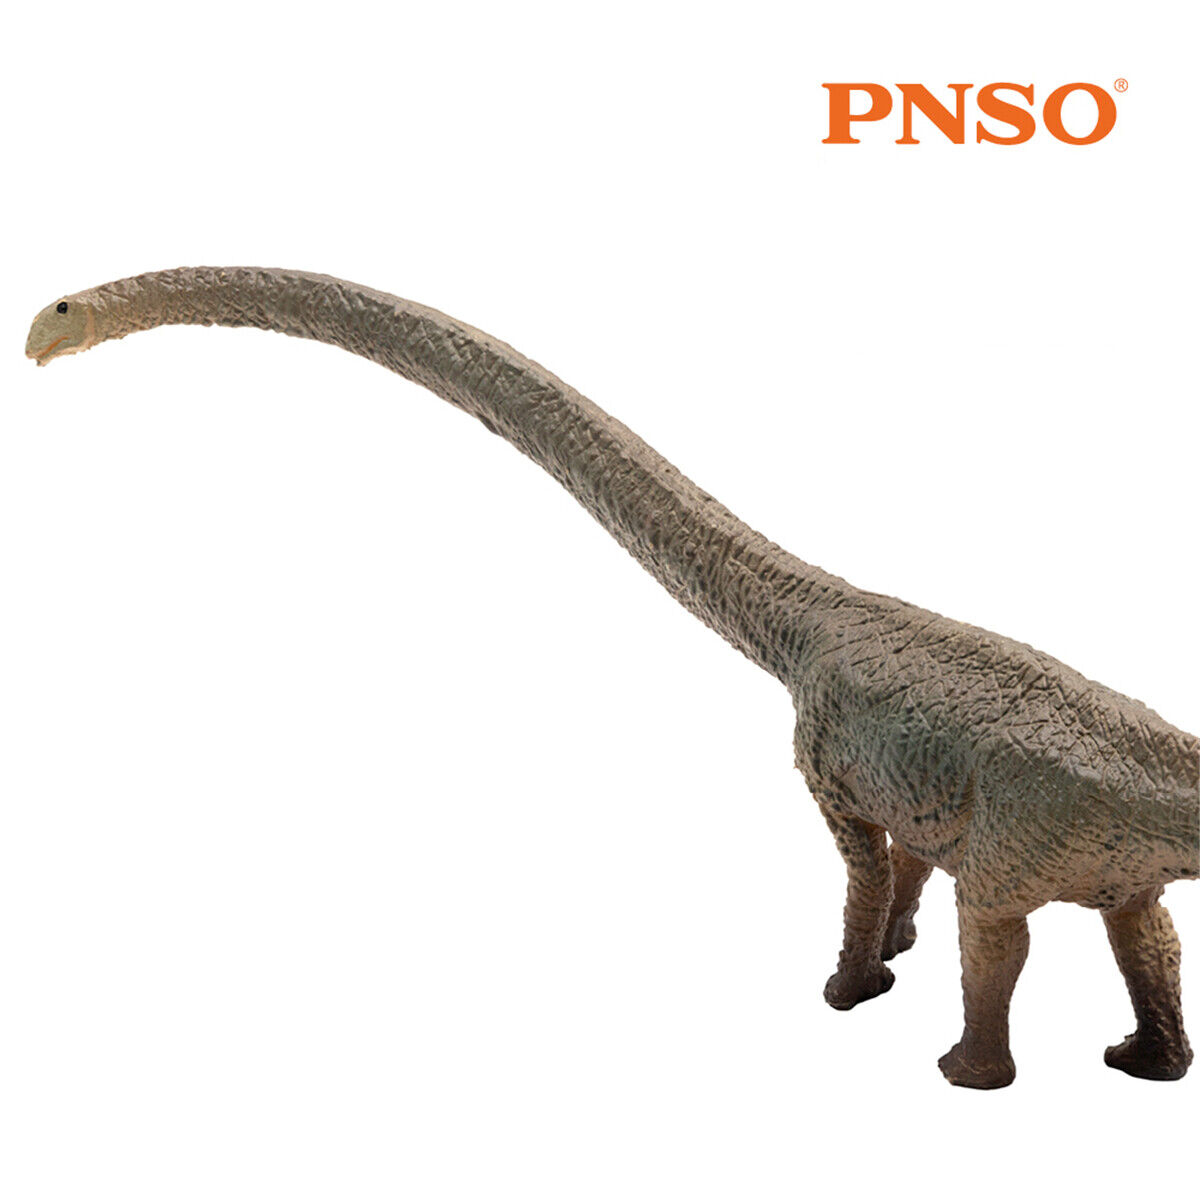 Pnso mamenchisaurus jurassic dinosaur figure collector animal decor kid toy gift